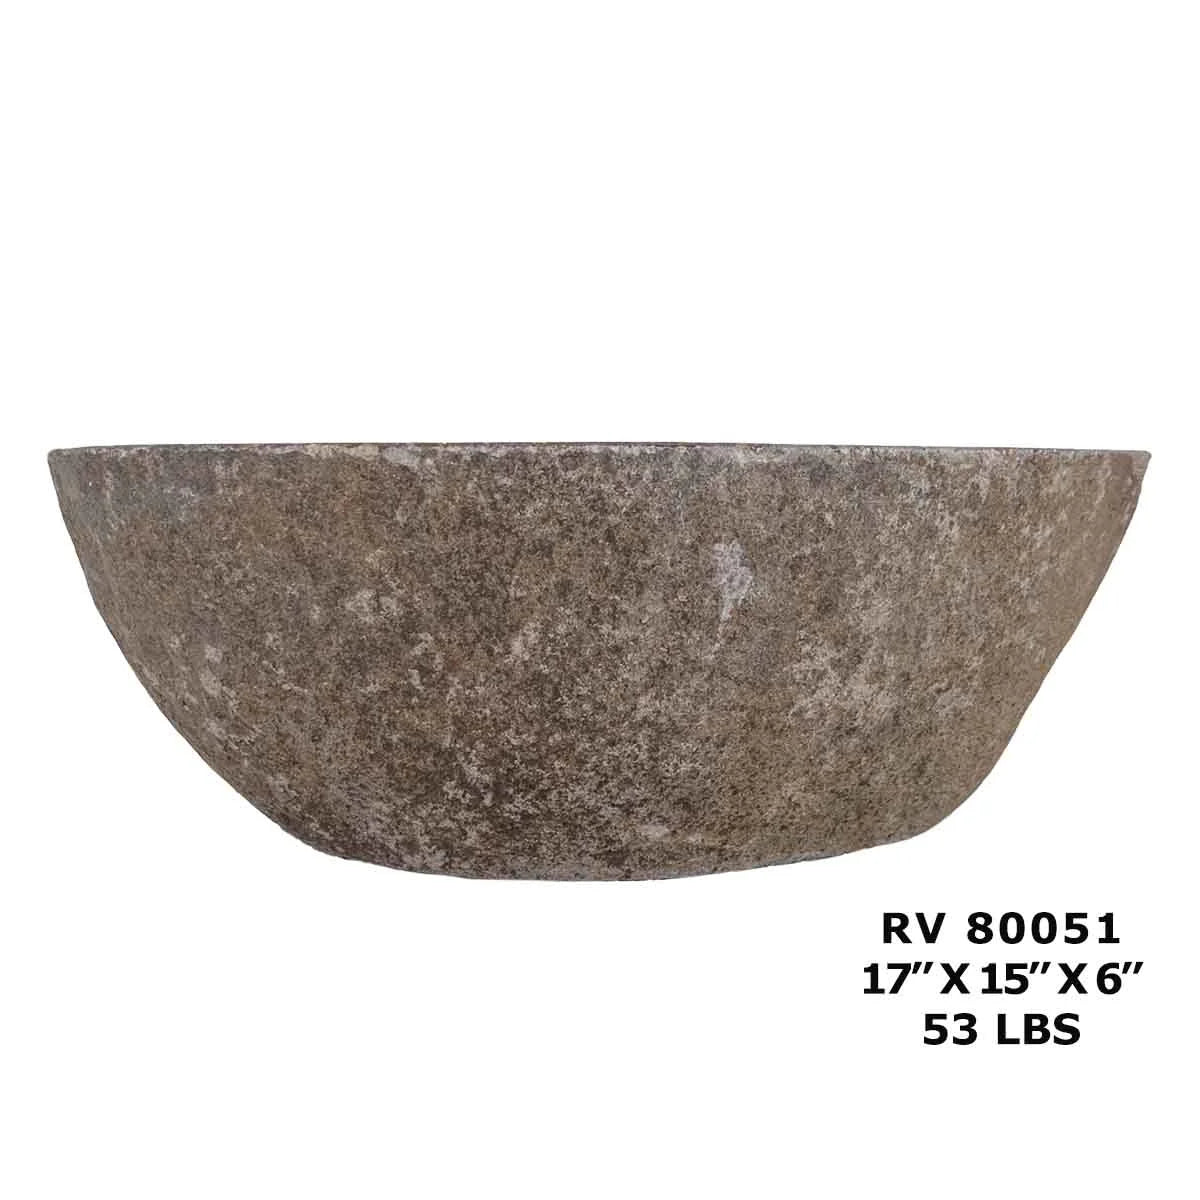 RV80051-River Stone Vessel Sink for Bathroom - Wash Basin